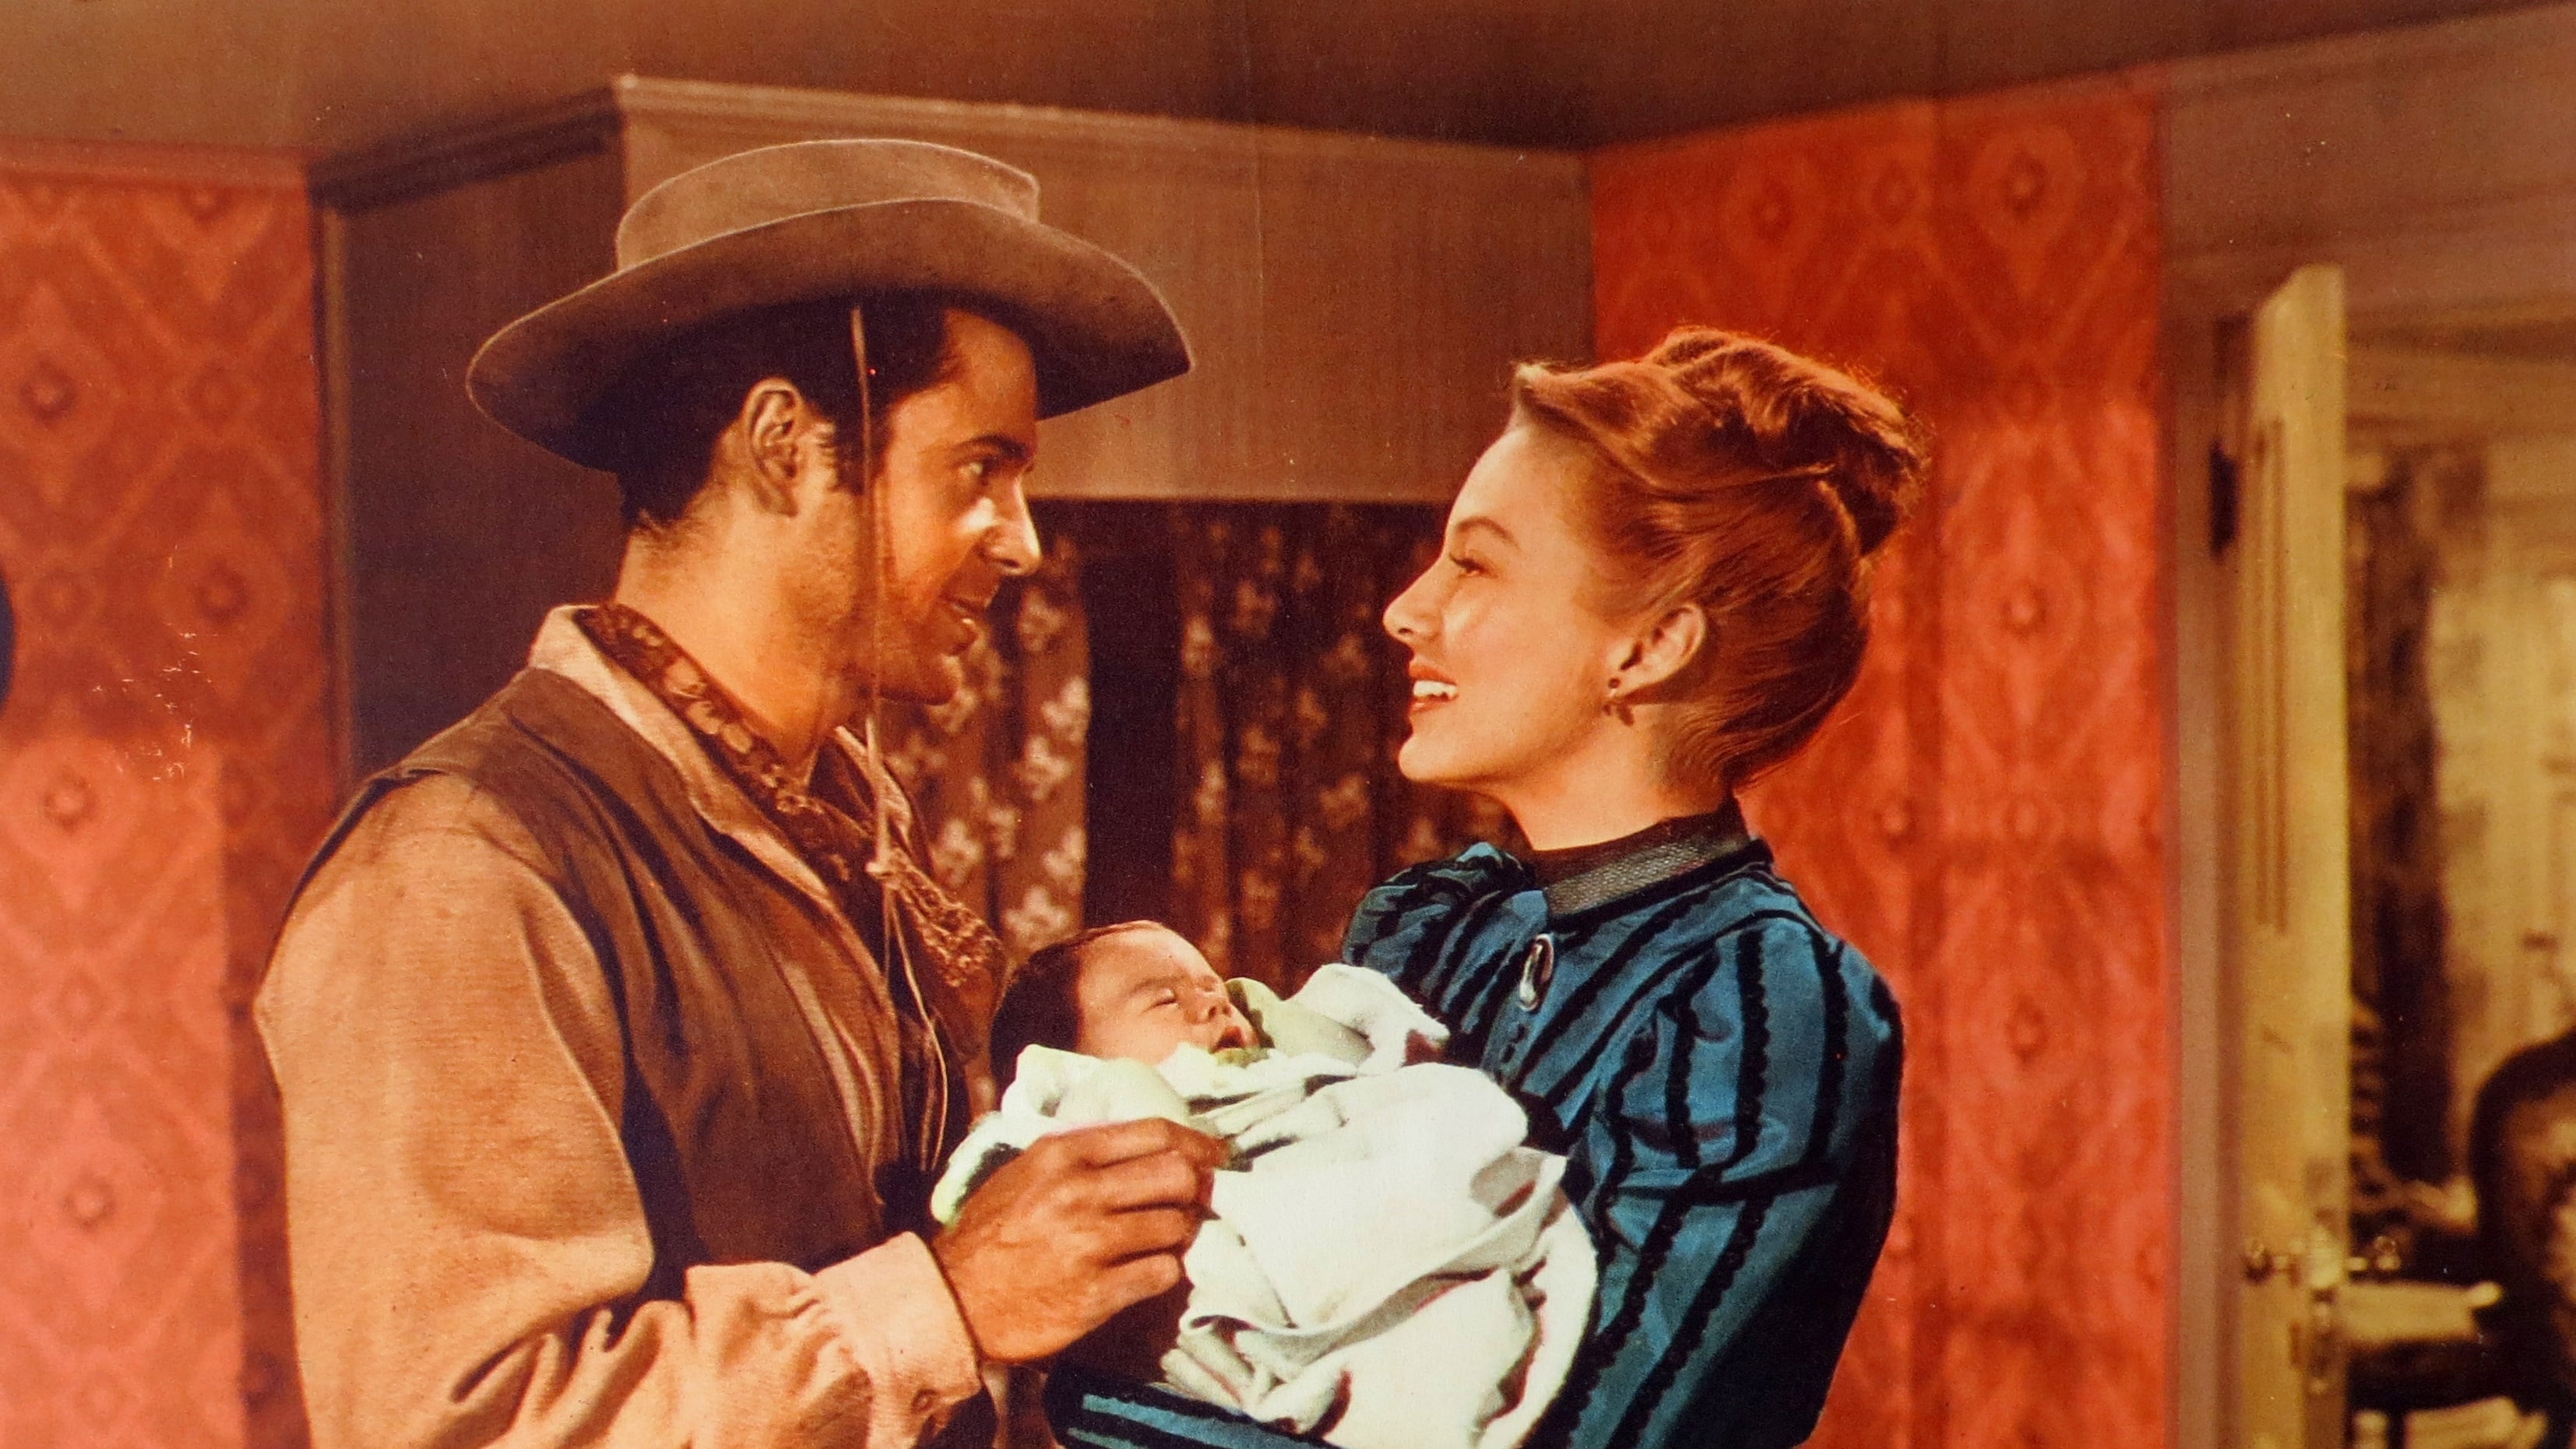 Renegades (1946)